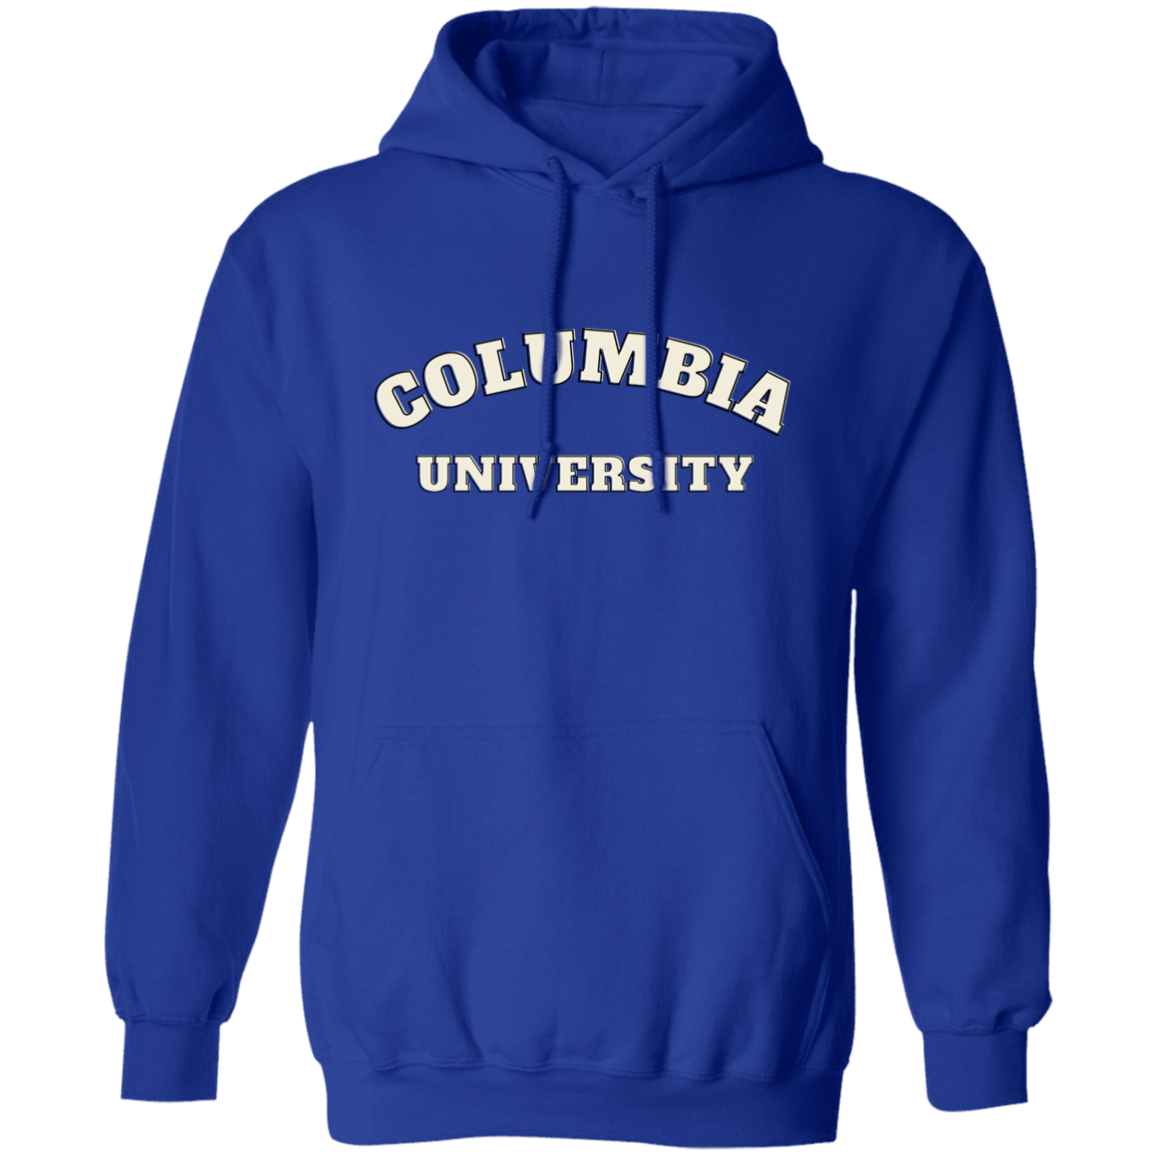 Columbia University College Pullover Hoodie, Birthday Gift